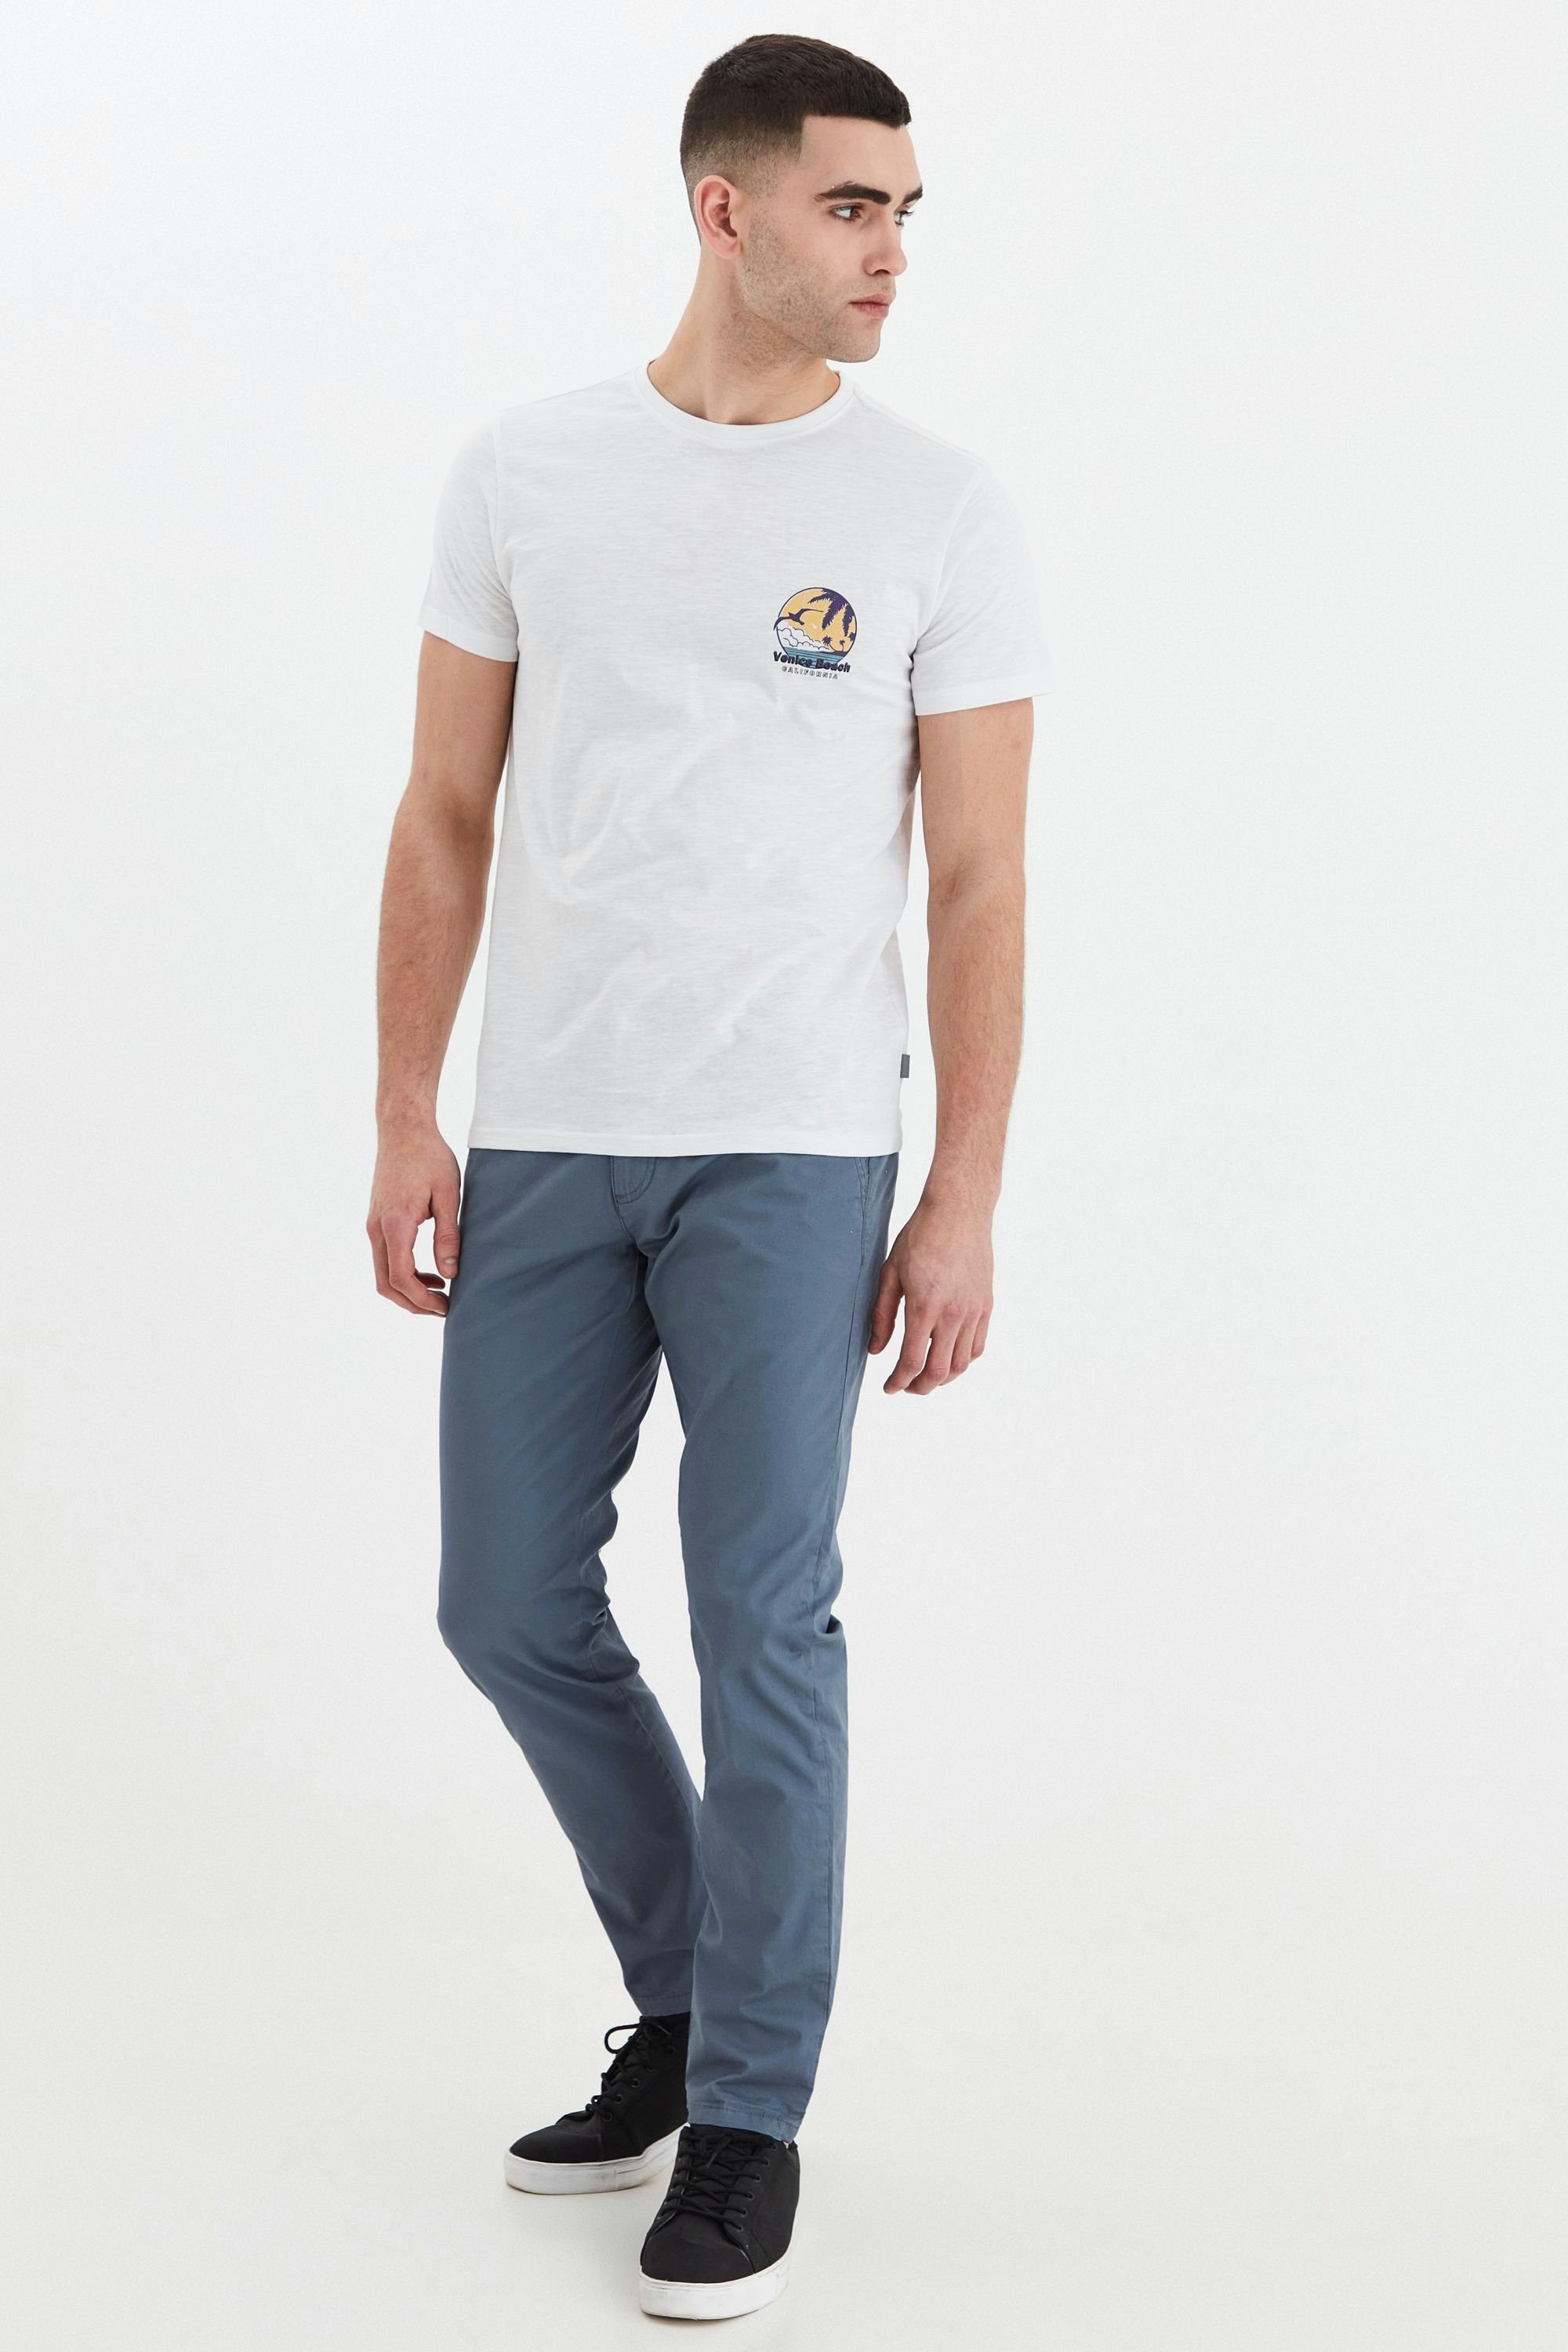 (110601) mit !Solid Print-Shirt White SDEmmo Print T-Shirt